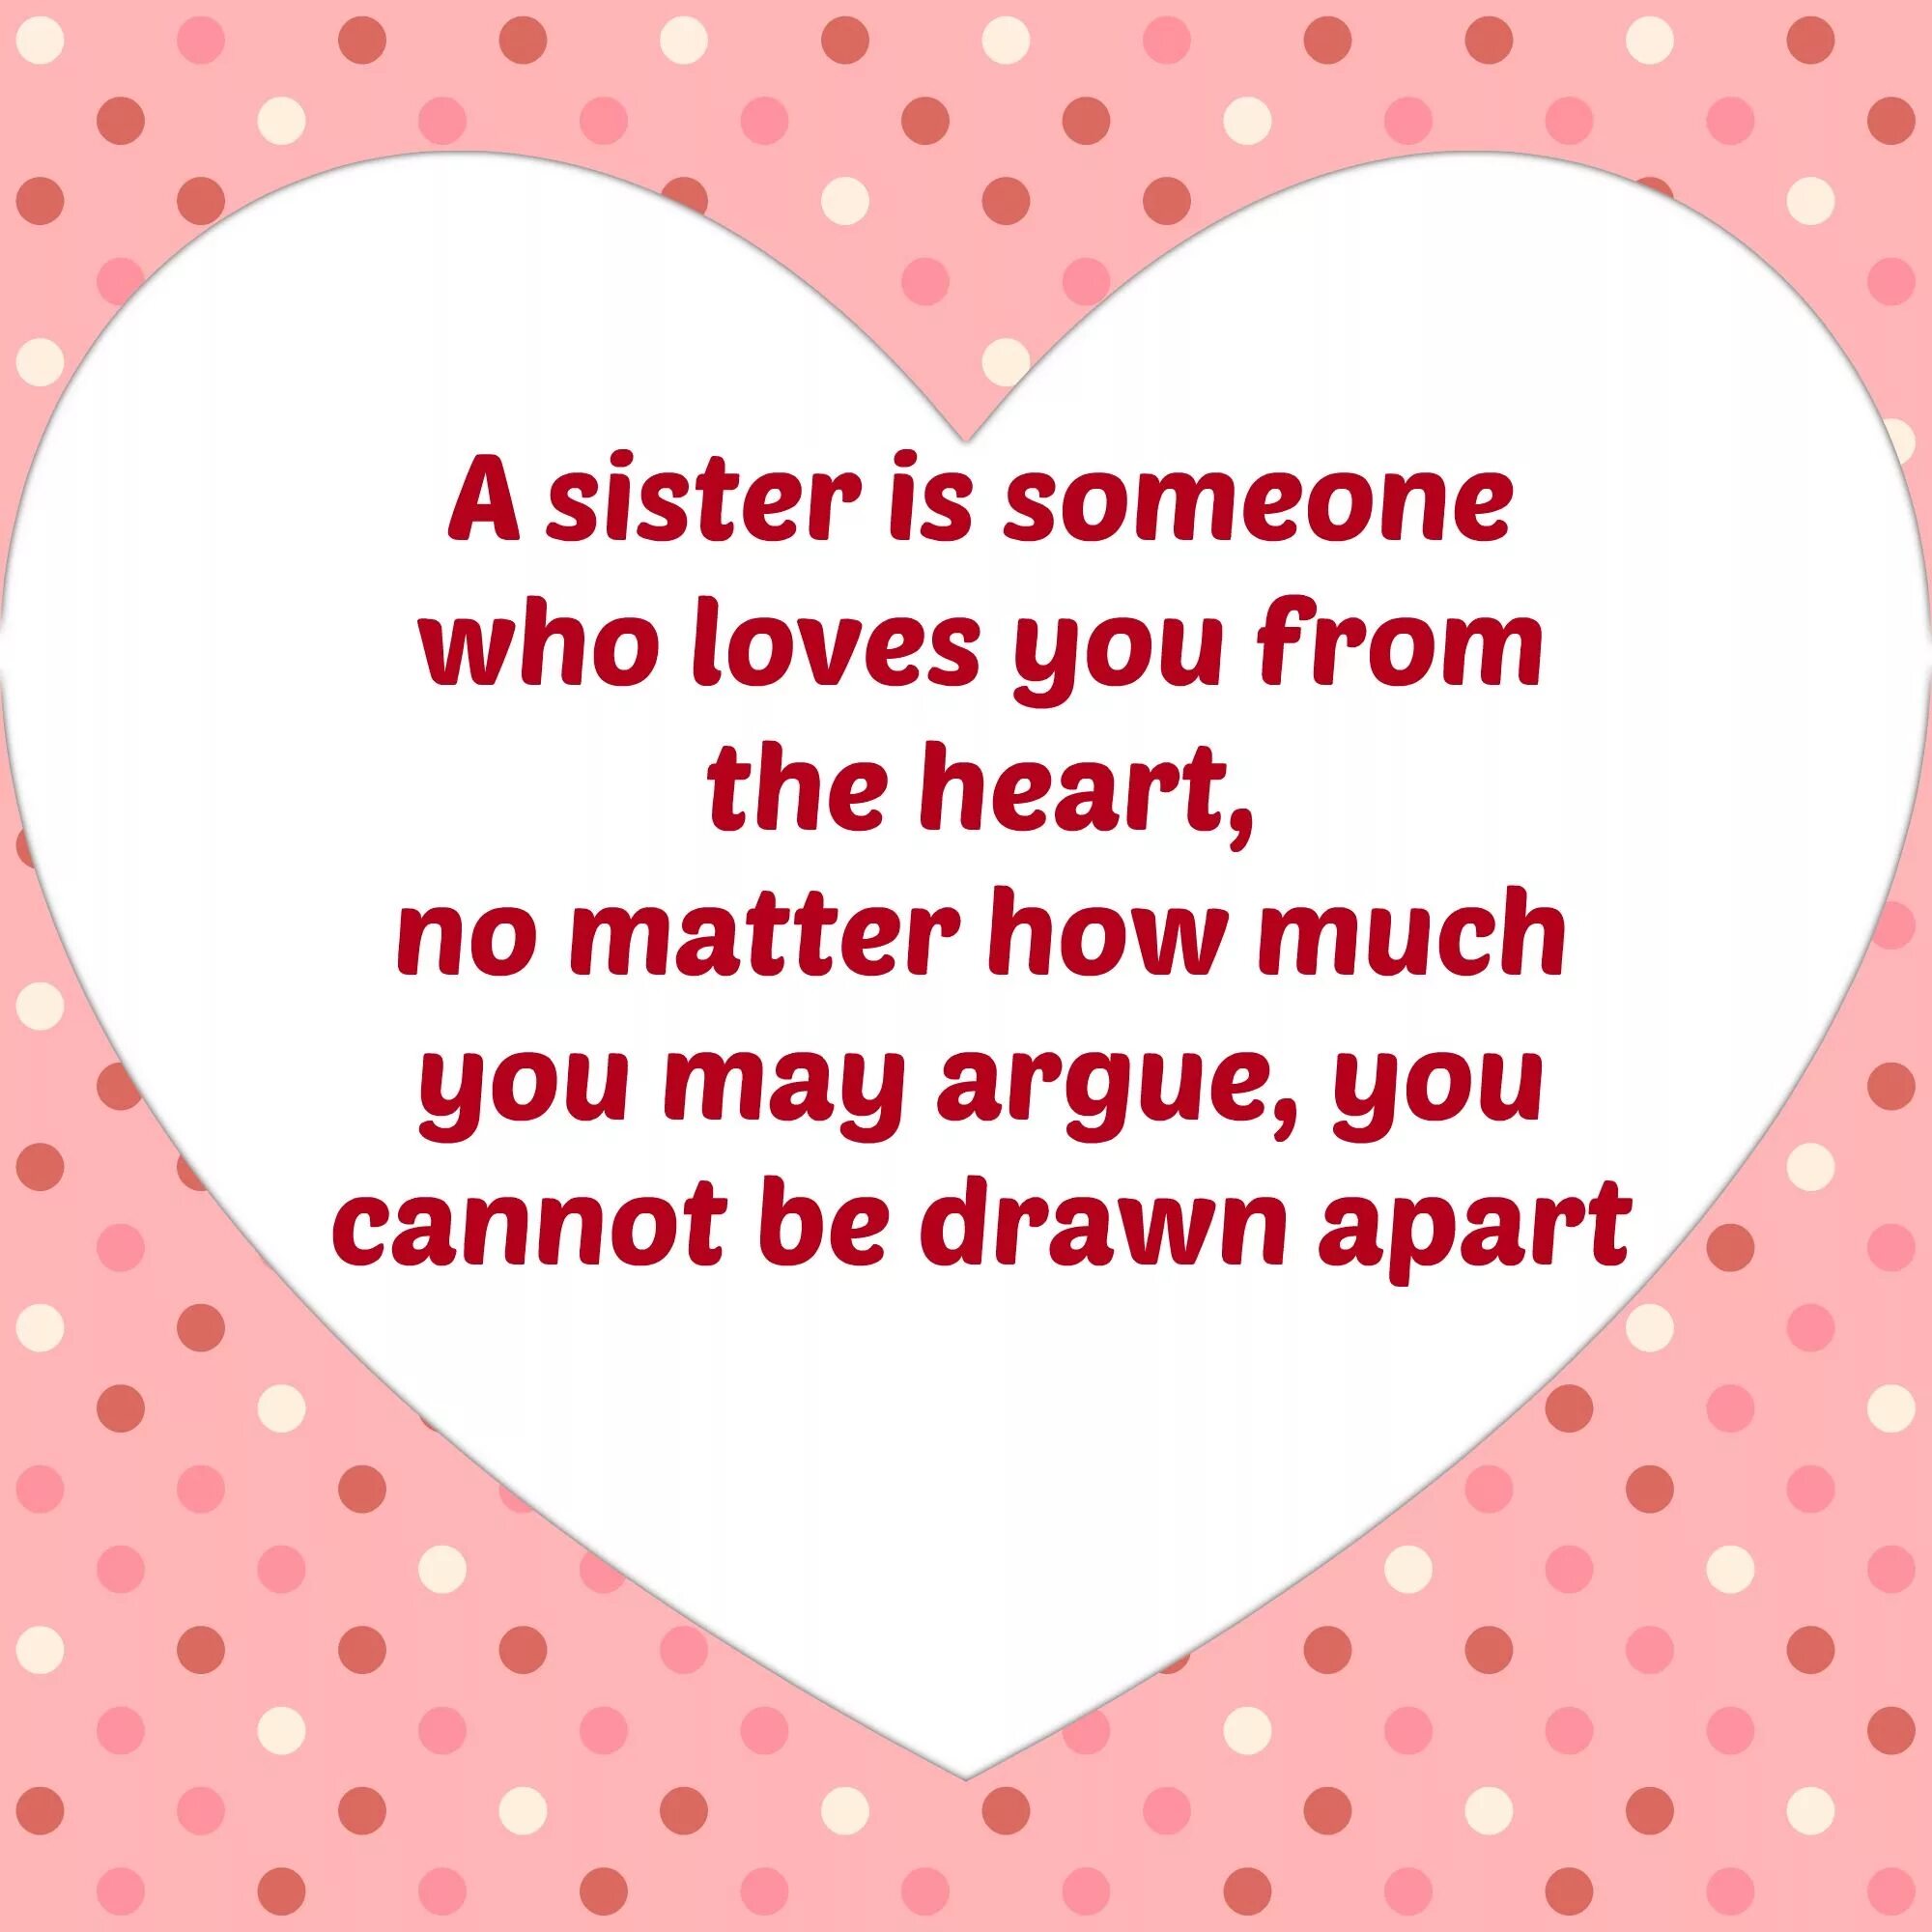 My sister. Love my sister. Картинка i Love my sister. I Love you sister картинка.